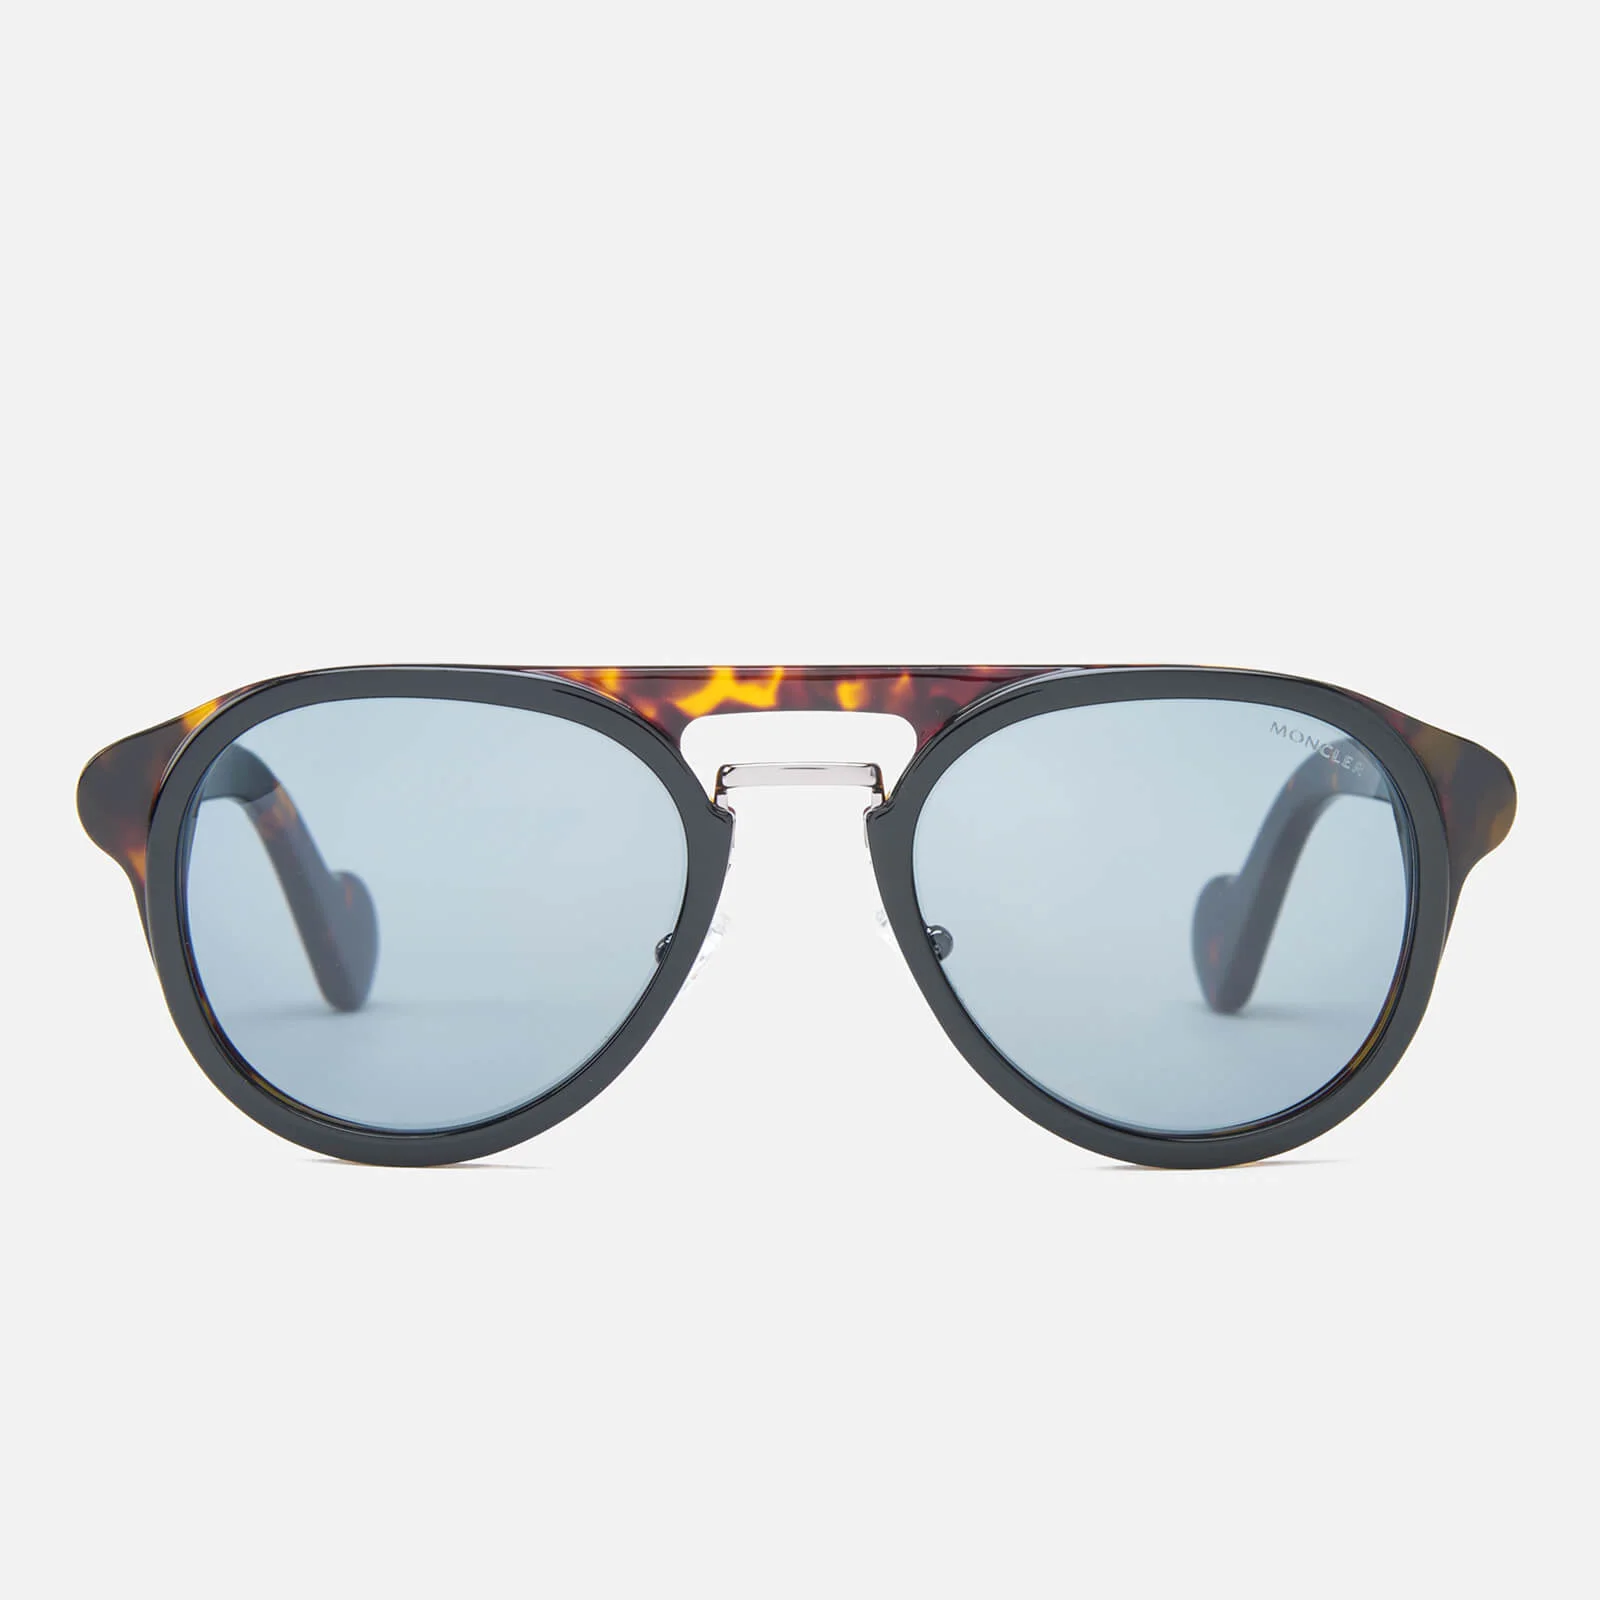 Moncler Men's Aviator Sunglasses - Black/Blue Image 1